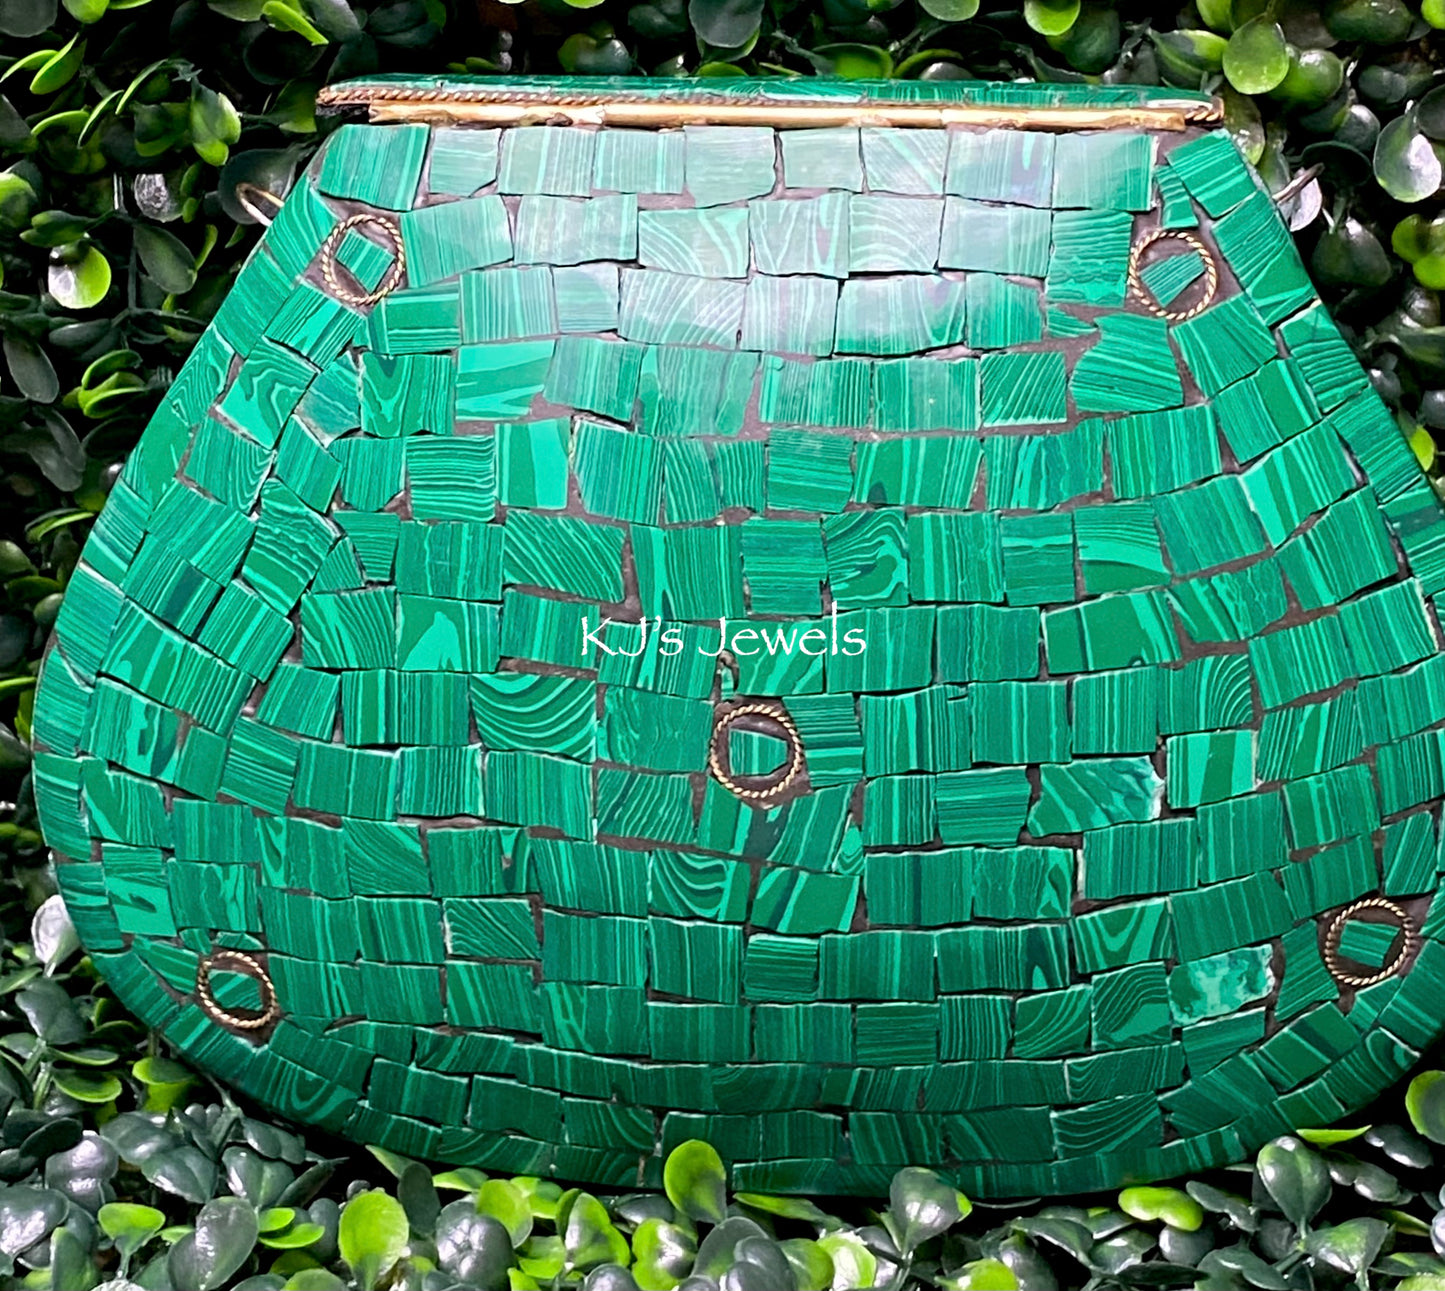 Ladies' Mosaic Tile Handbag/Purse with Gold Accent Tiles